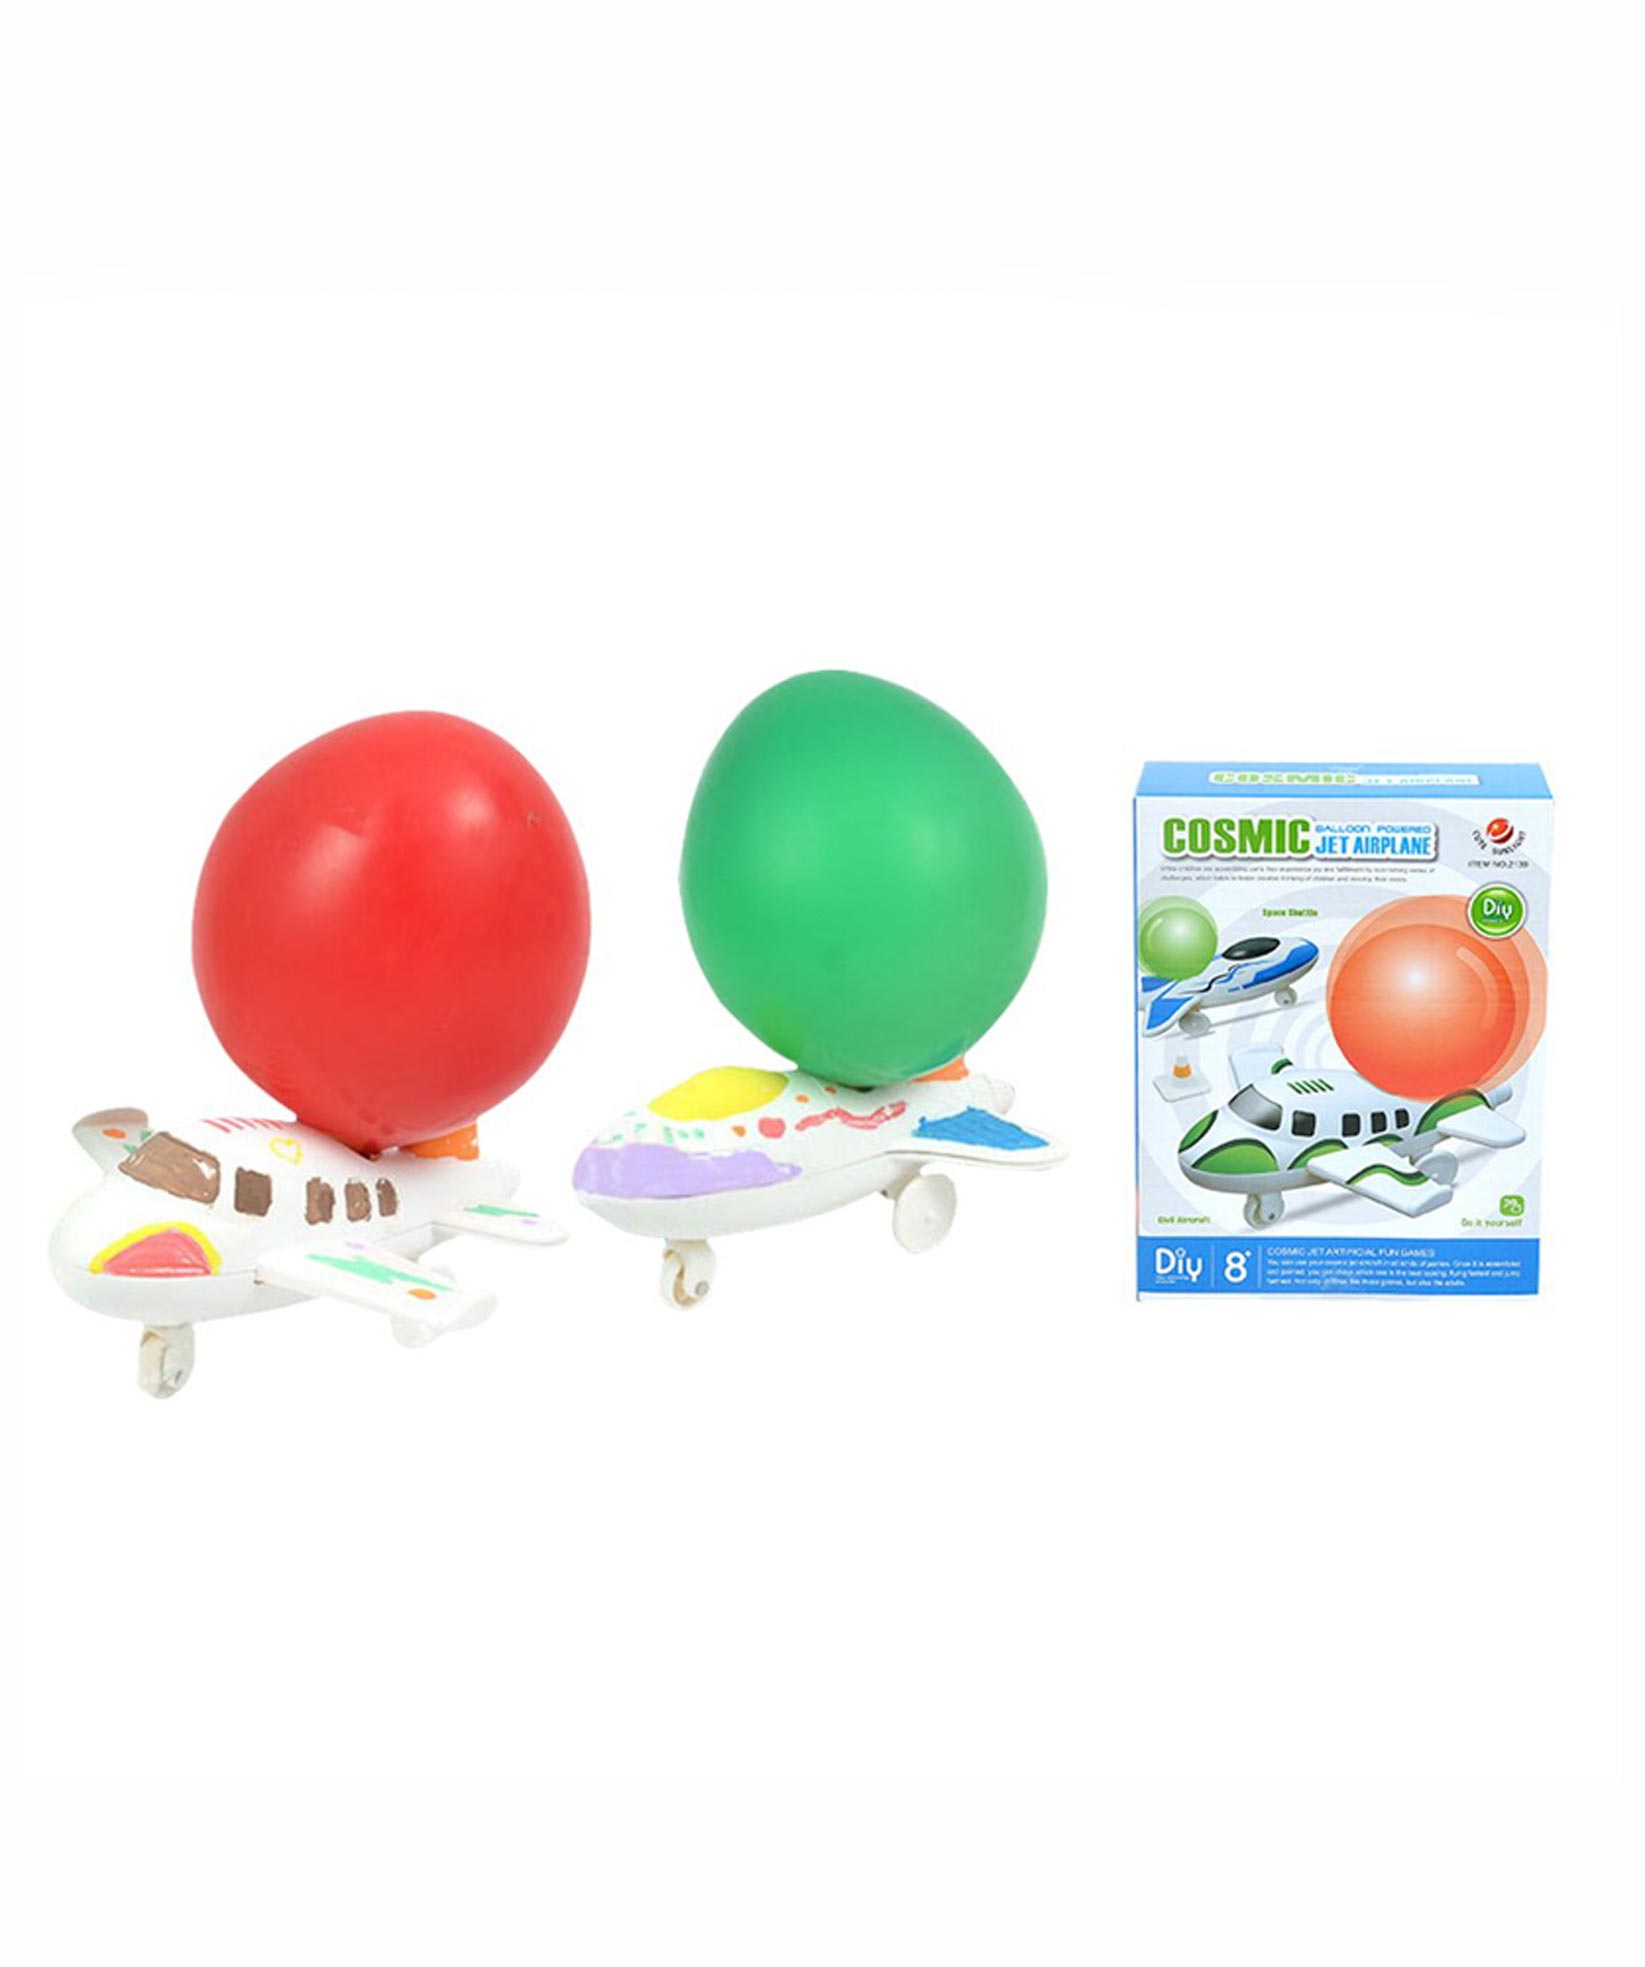 Airplane ''Yoyo'' balloon powered